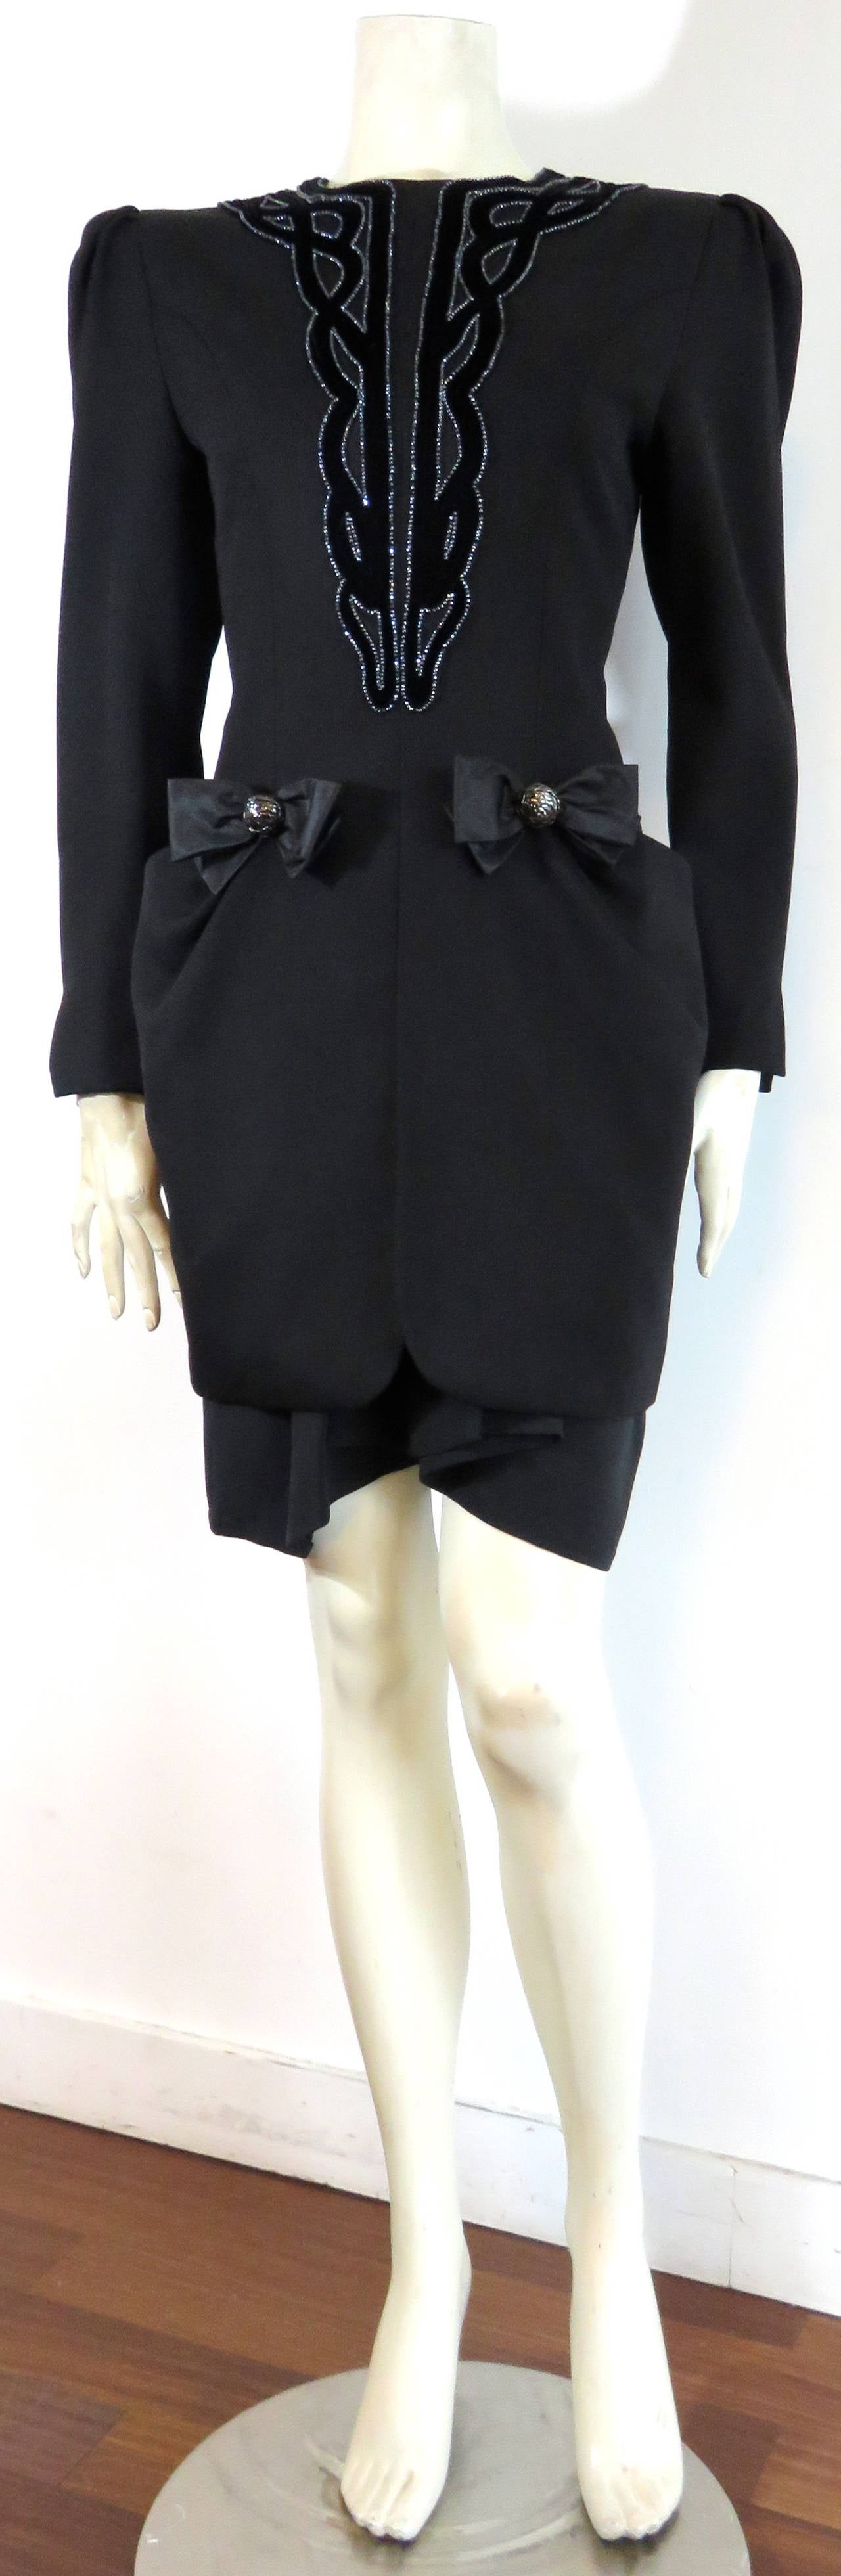 Excellent condition, 1980's NINA RICCI 2pc., black cocktail dress with velvet appliqué & beading details.

The main, over-dress features a gorgeous, Nouveau-style, velvet, appliqué at the front chest, and around the neckline with sparkling,